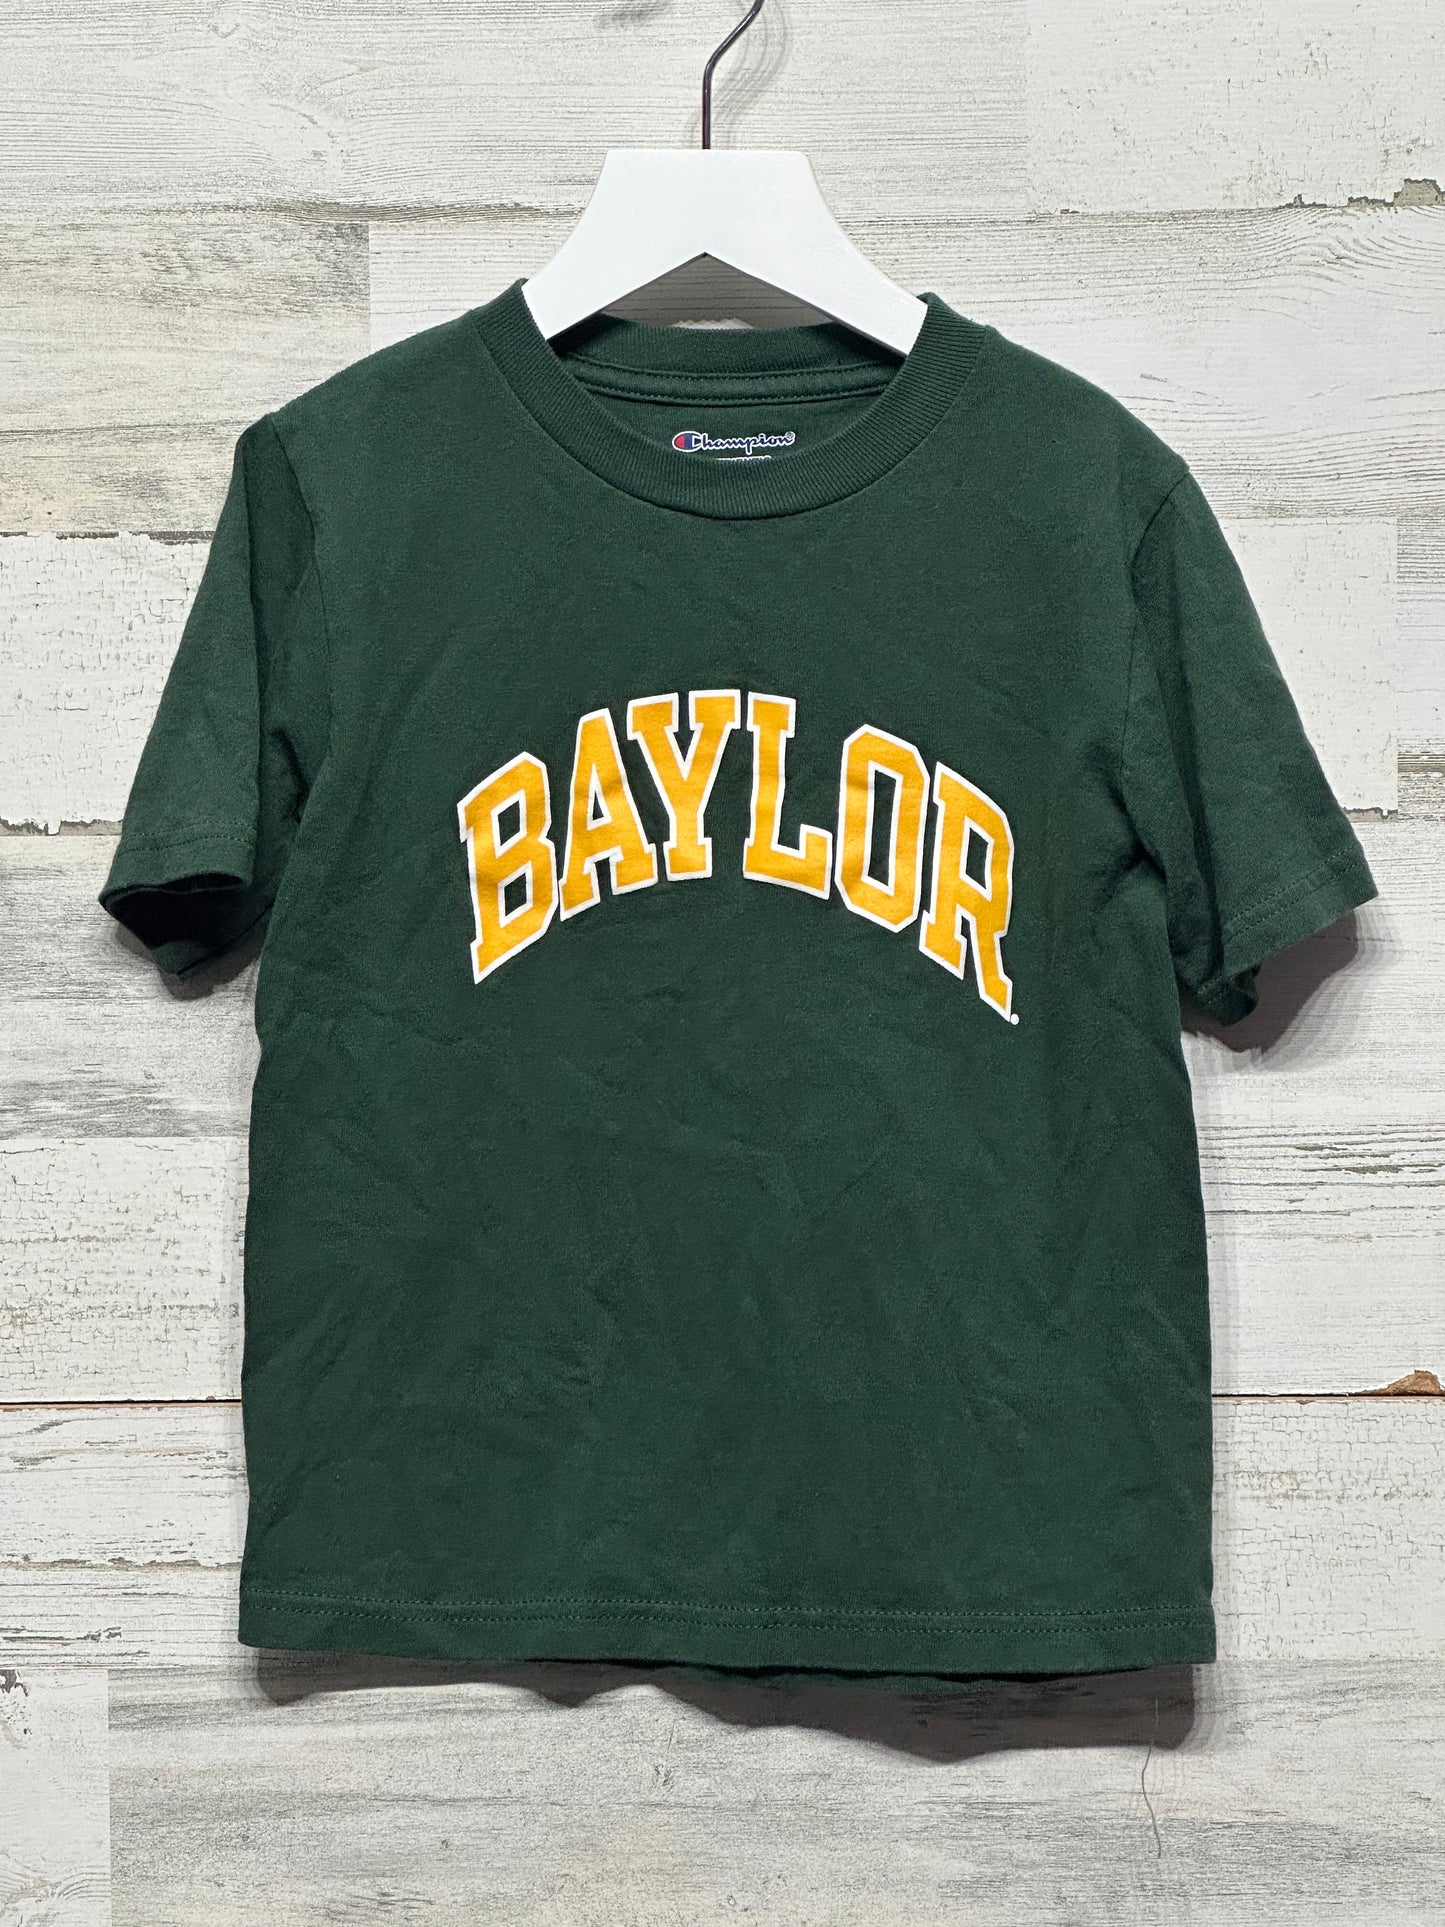 Boys Size 4/5 Champion Baylor Shirt - Good Used Condition